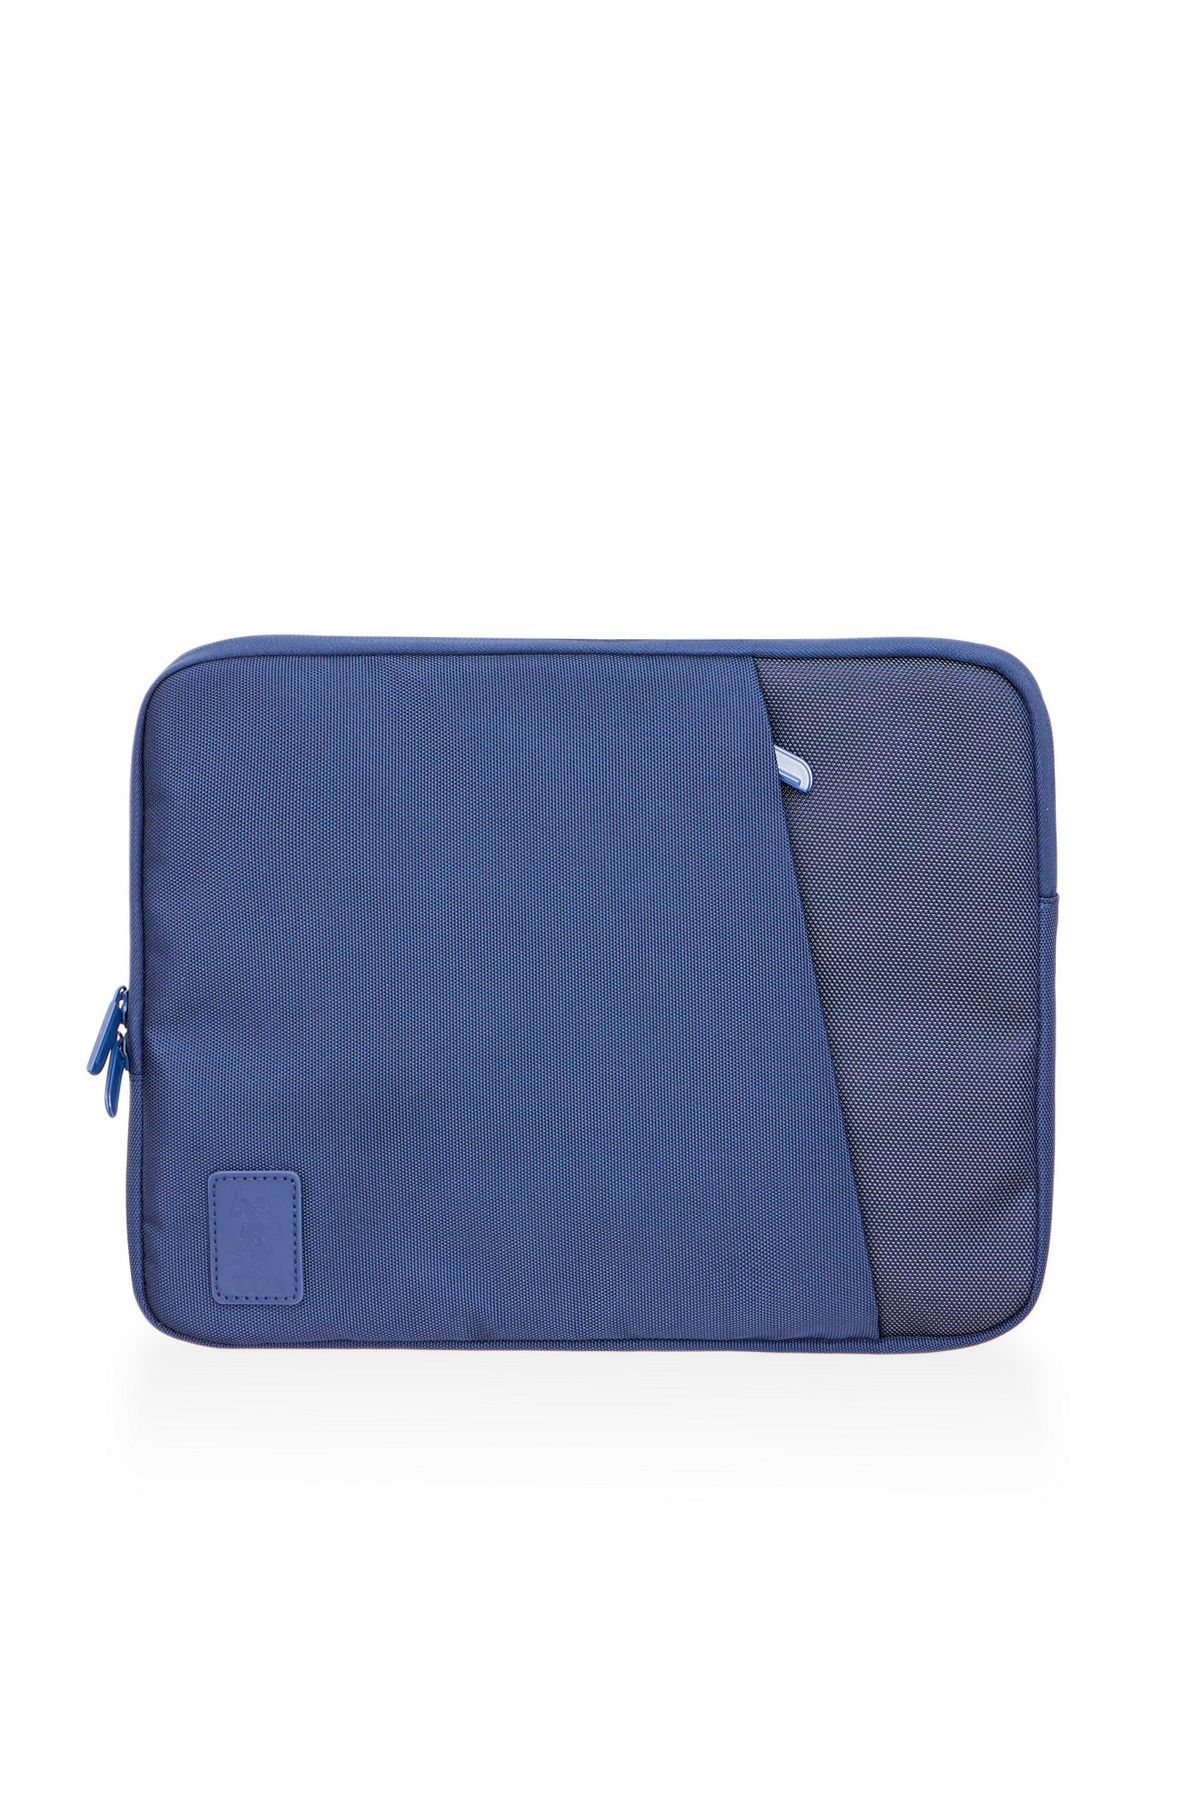 U.S. Polo Assn. U.S. POLO ASSN. 23694-23693 Tablet çantası kılıf Macbook Air - Macbook Pro 13&13.3 Inç Uyumlu LACİVE